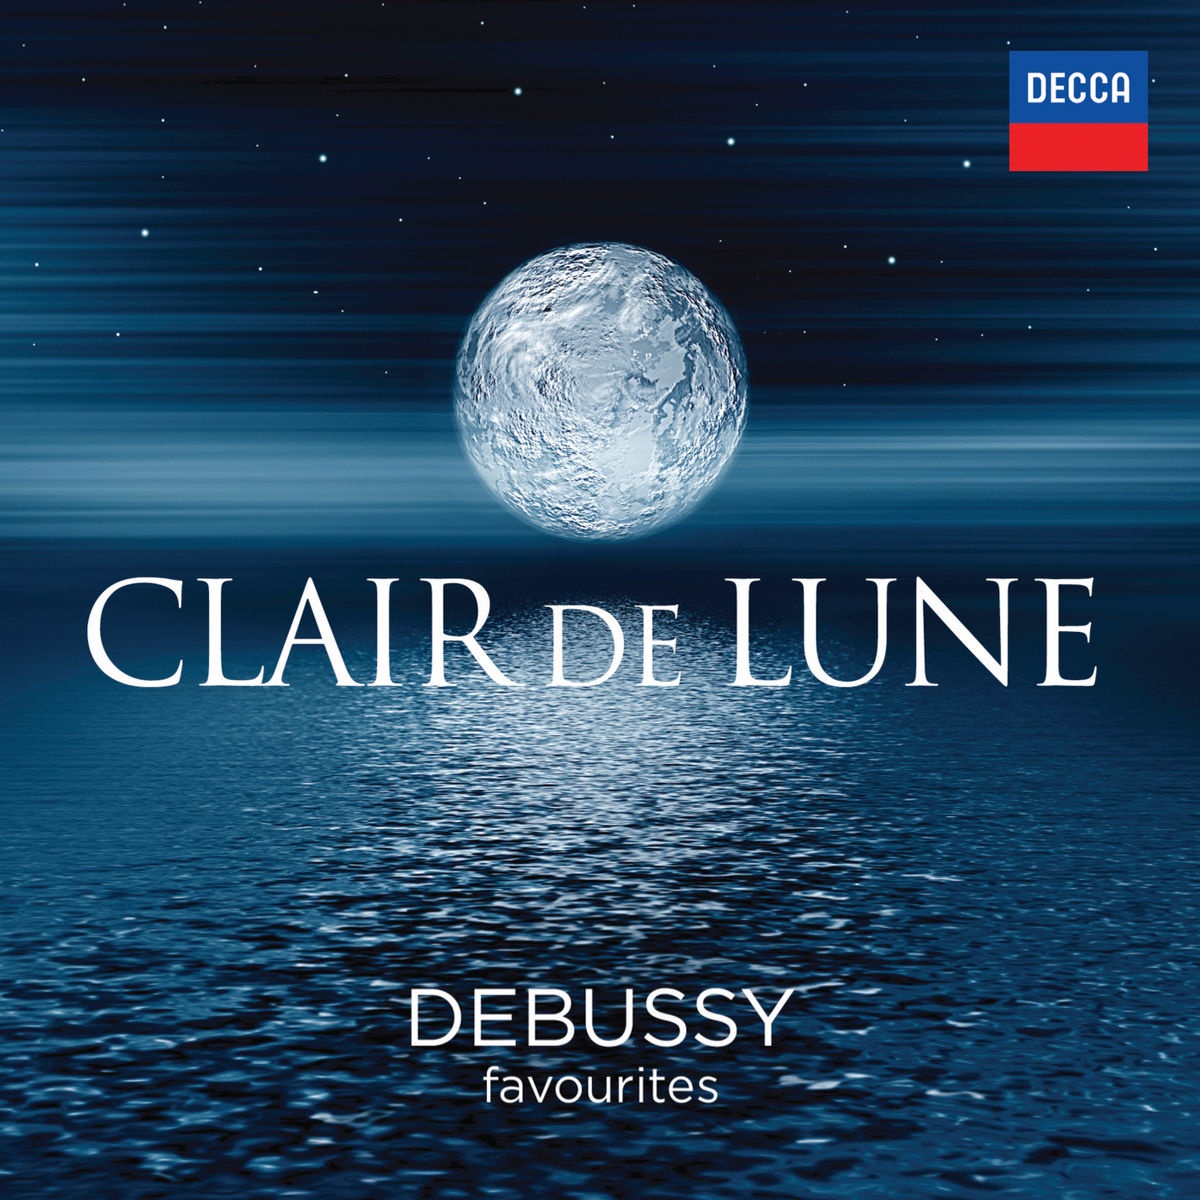 Debussy: Nocturnes  orchestral version  2. F tes